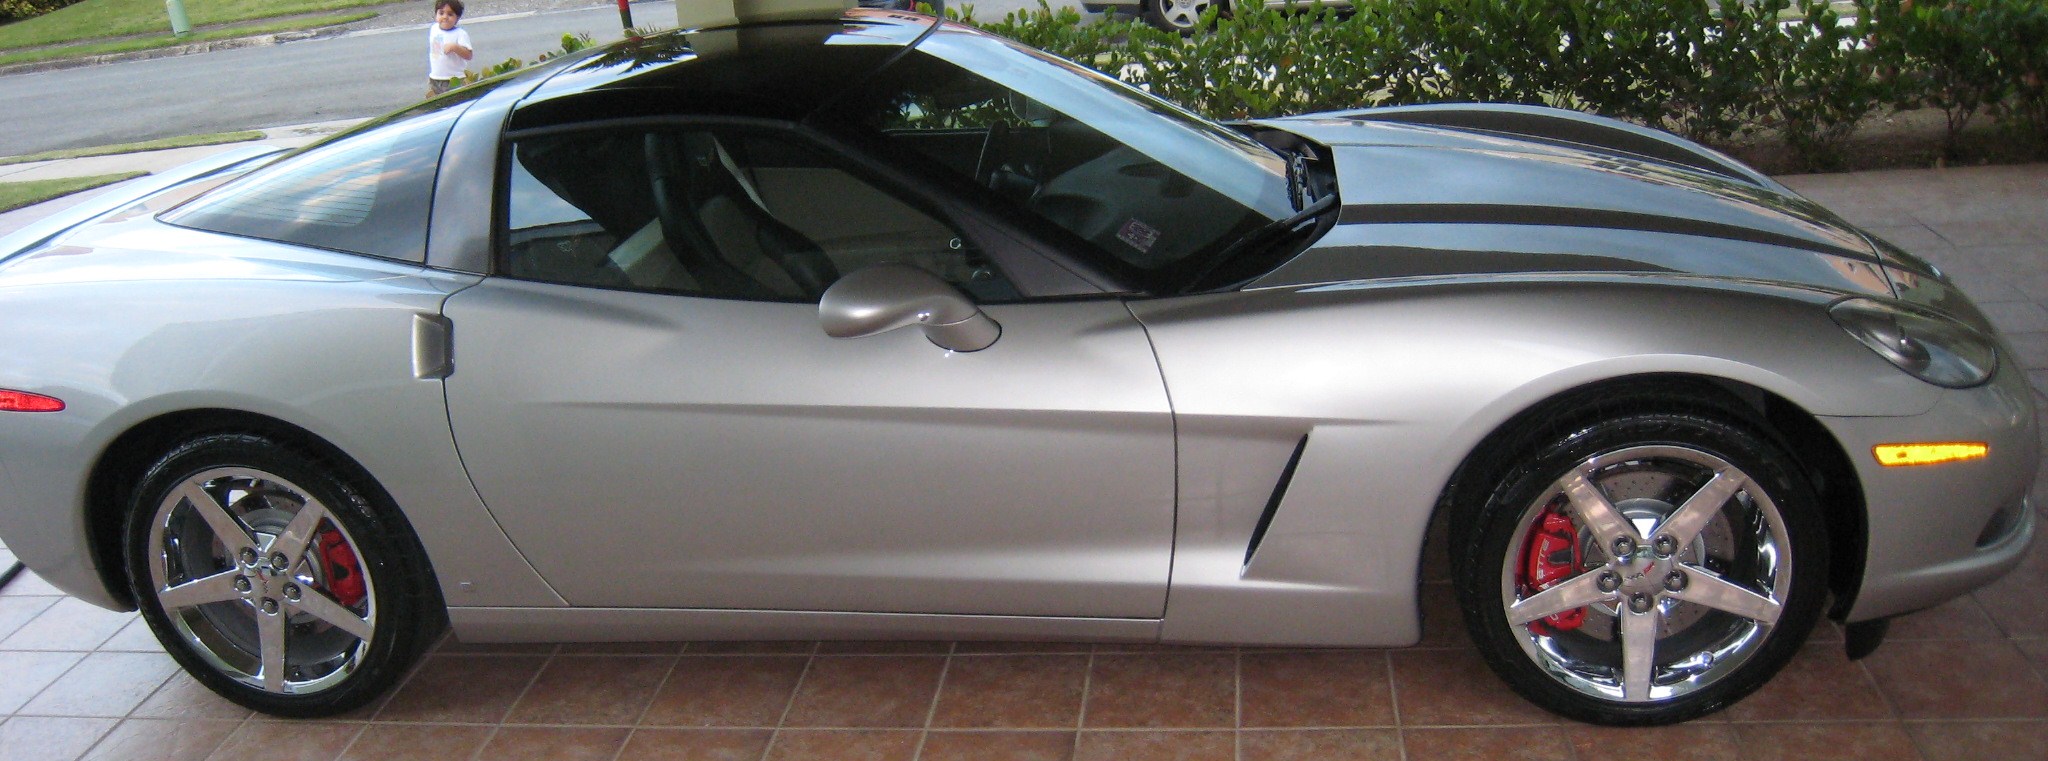  2008 Chevrolet Corvette ls3 automatic 6speed